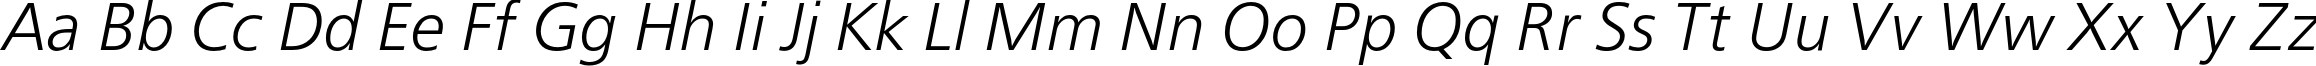 Пример написания английского алфавита шрифтом FreeSetC Italic